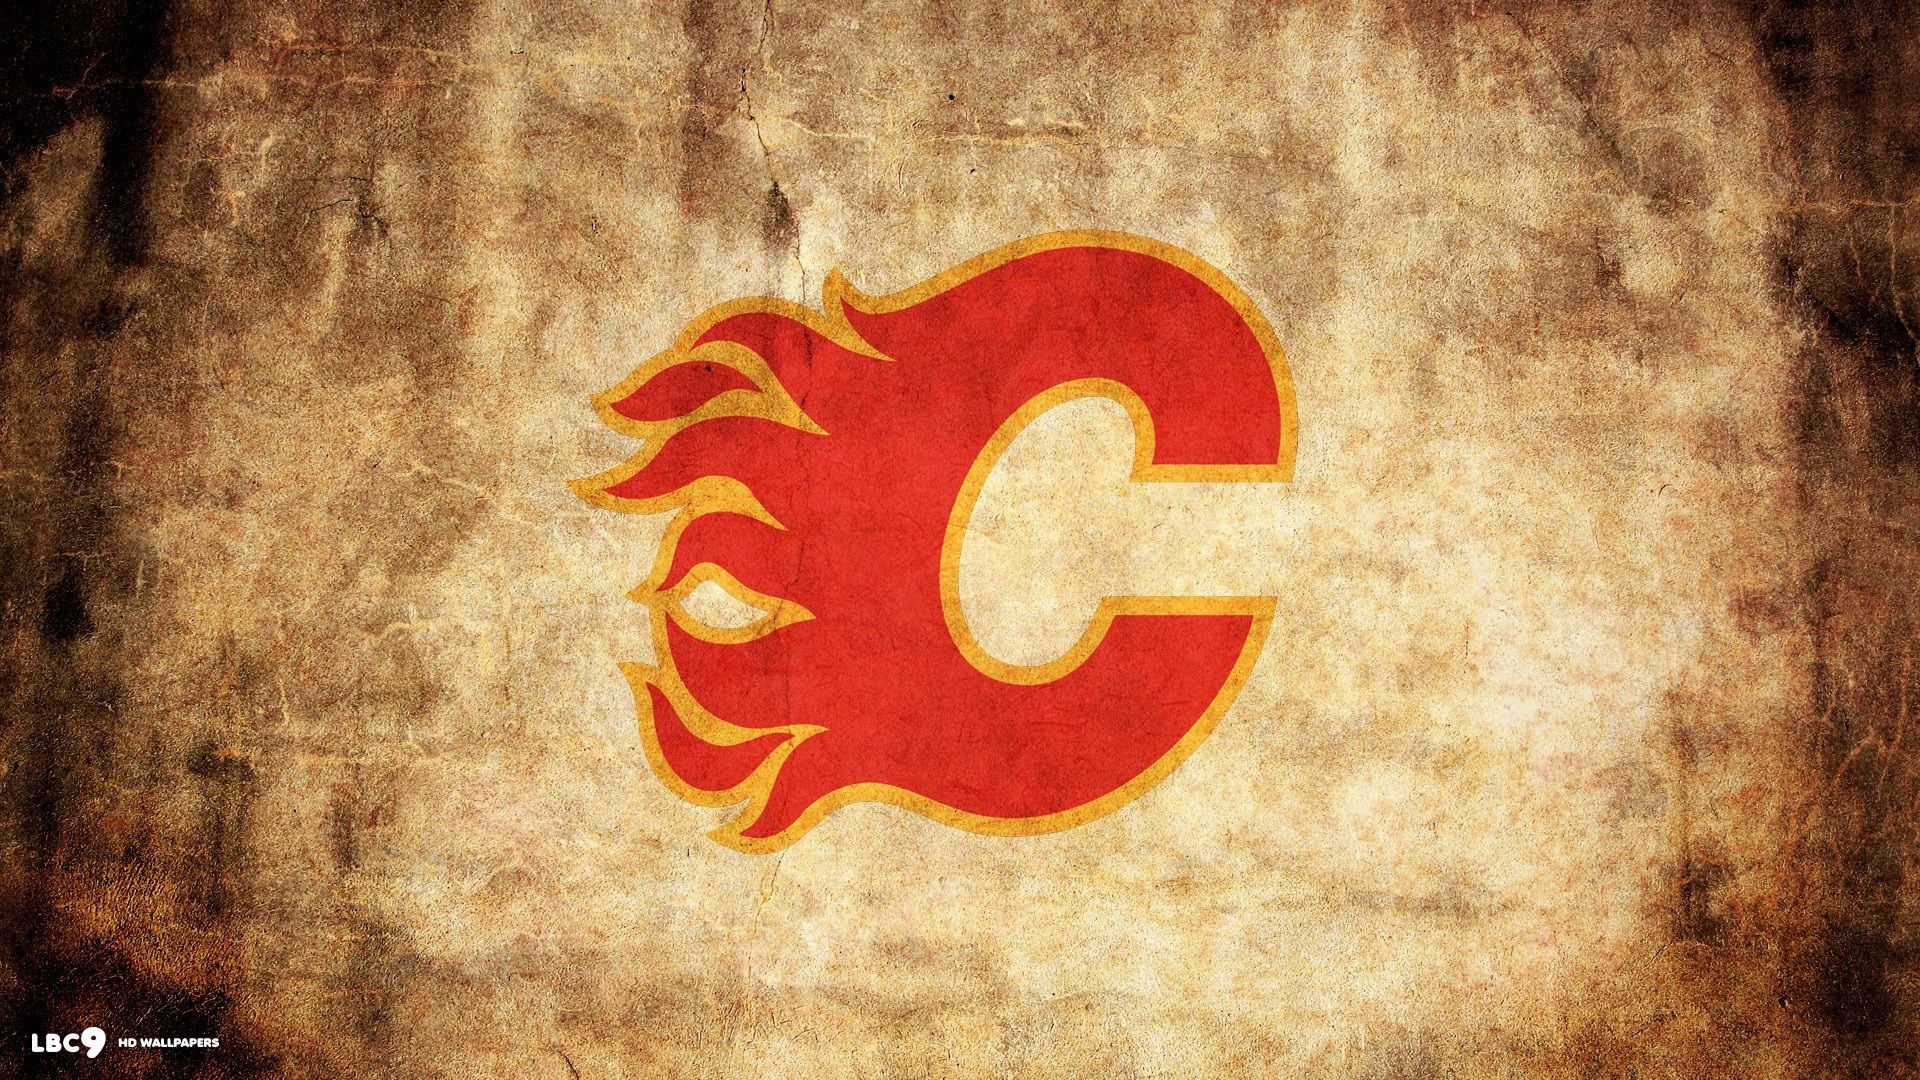 Calgary Flames Wallpapers Desktop 1920x1080   4USkY